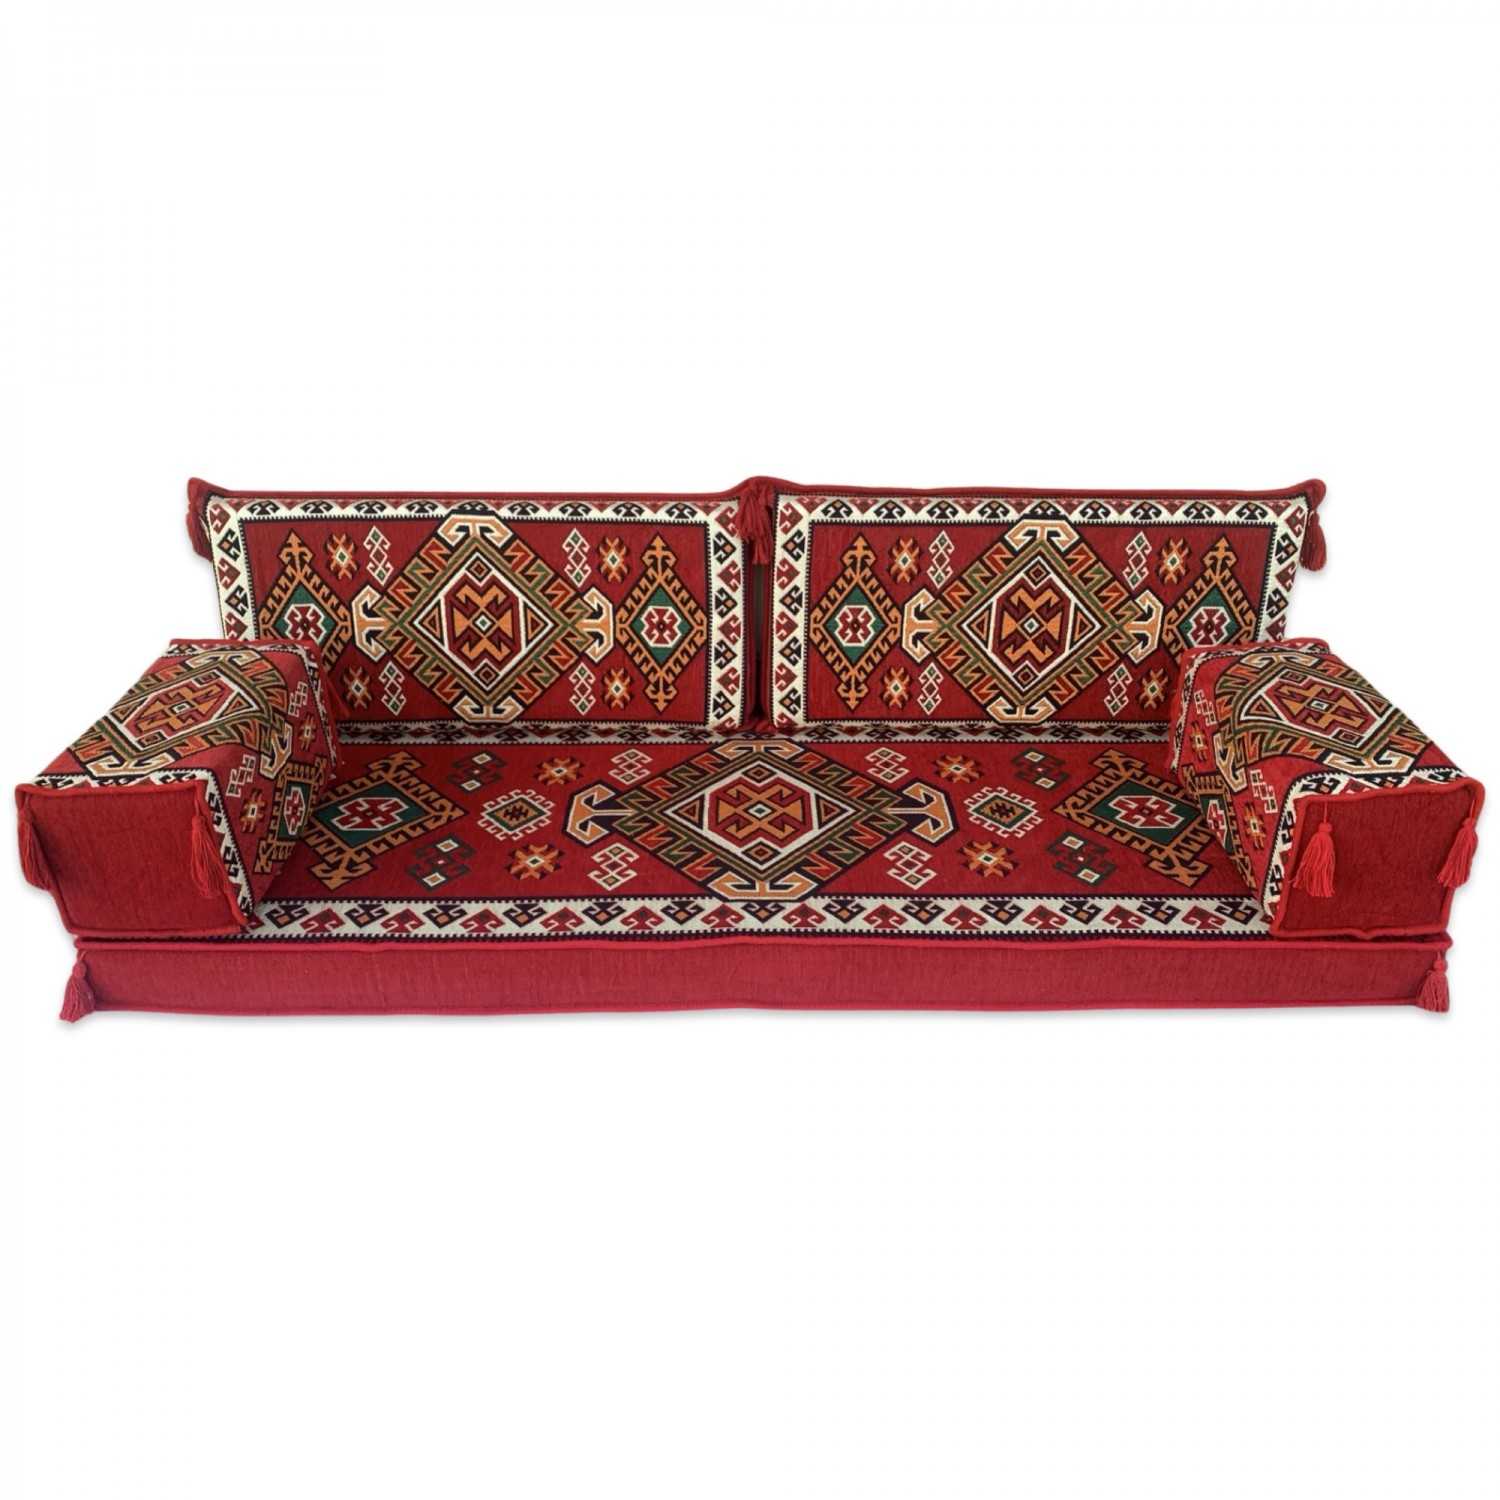 LUXOR Red Three Seater Majlis Floor Sofa Set